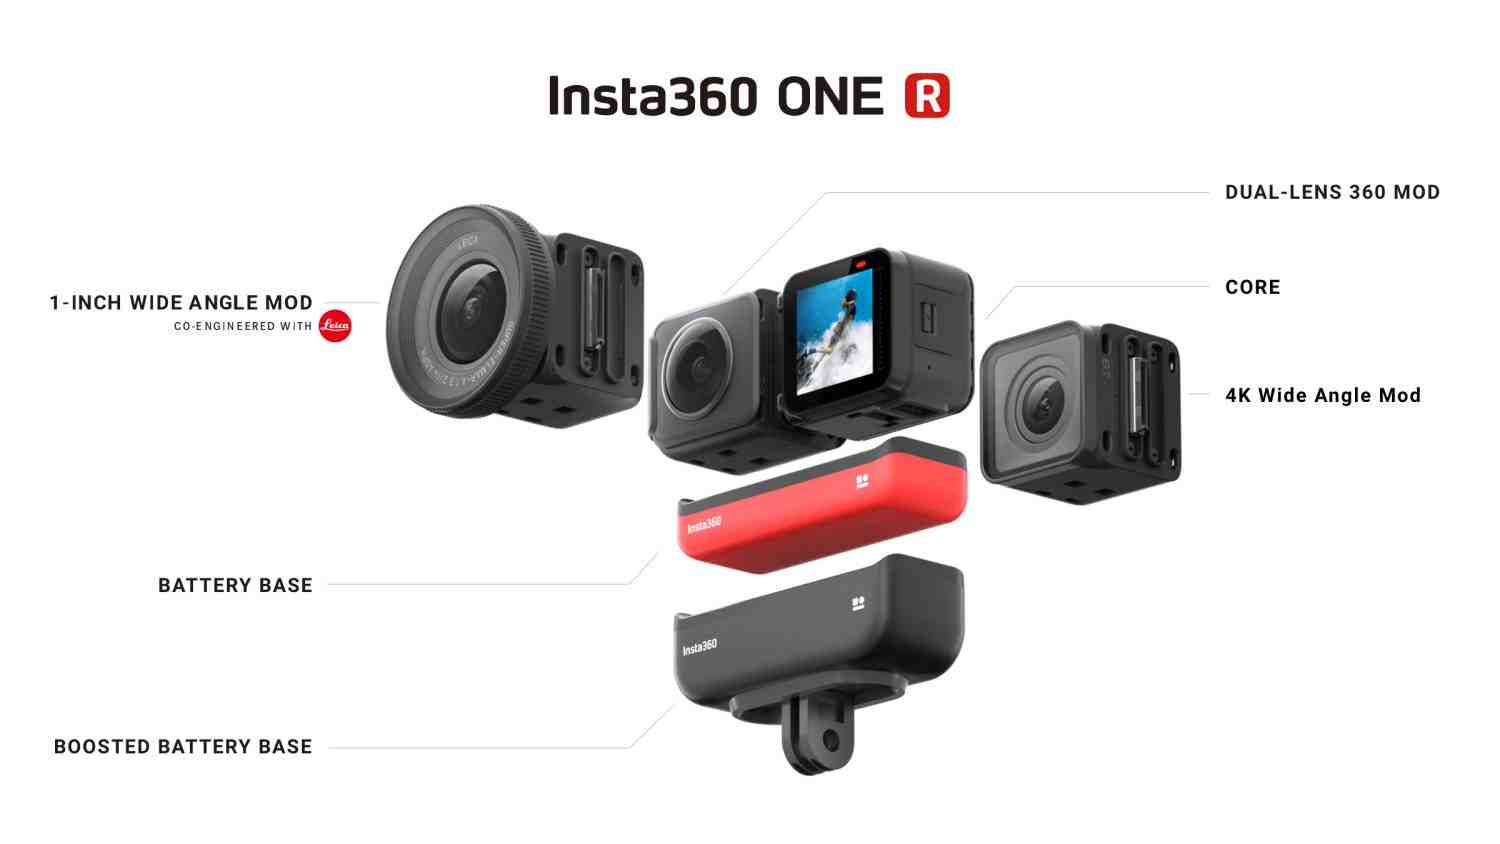 Are Insta360 cameras good?